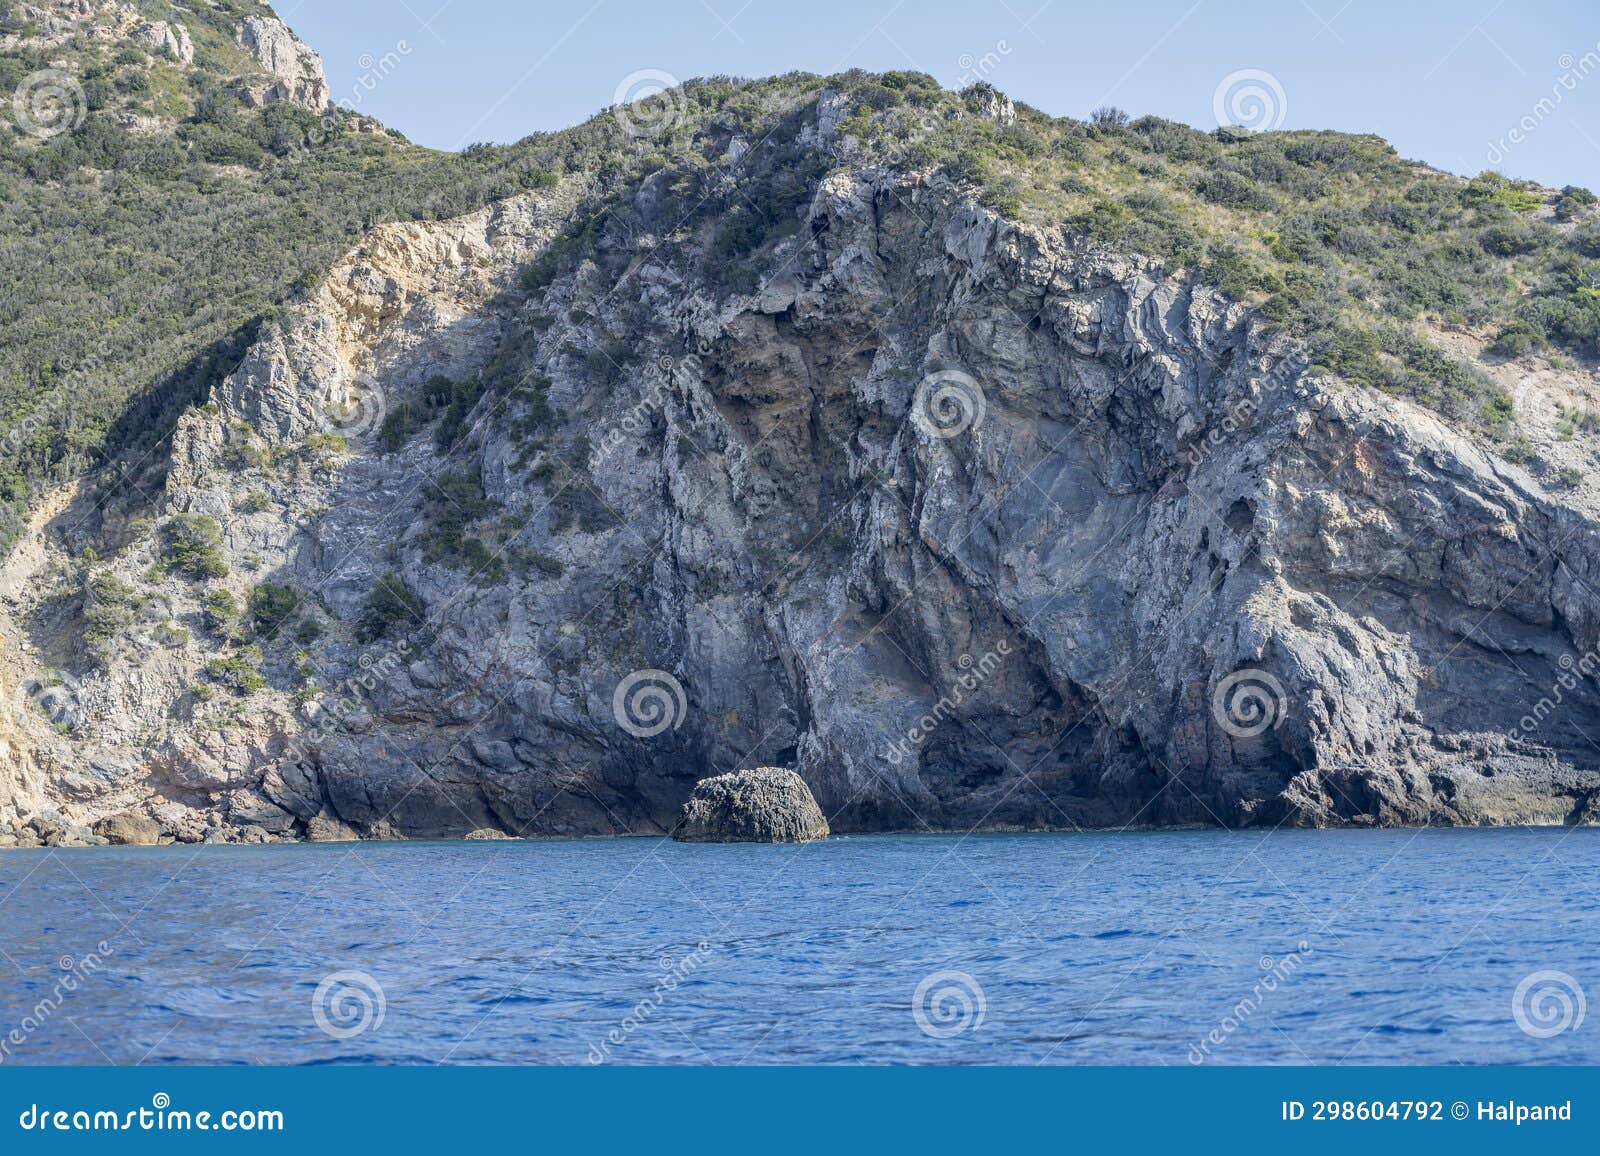 boulder and steep cliffs near uomo cape, argentario, italy